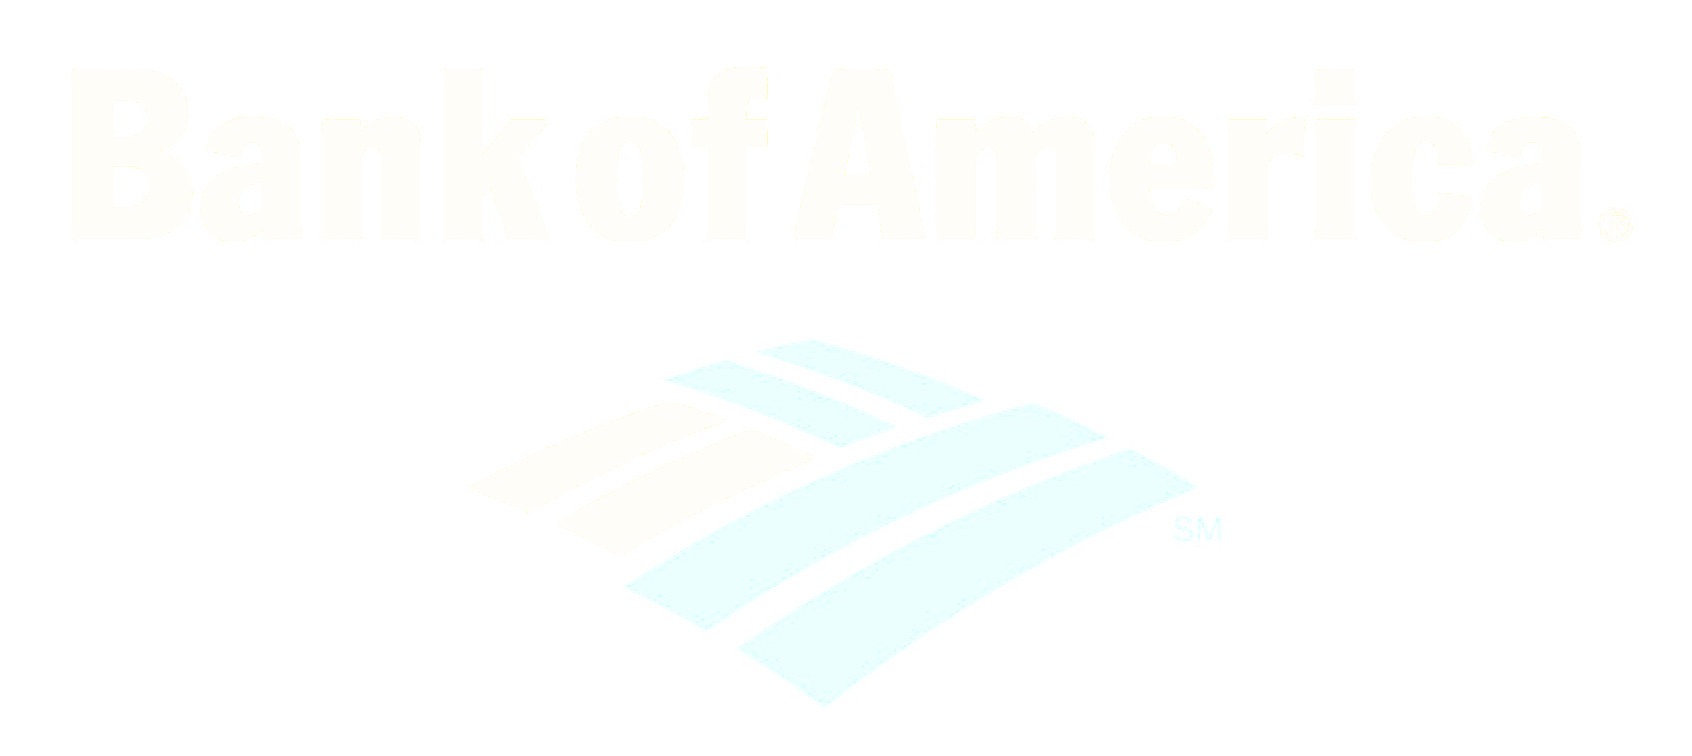 Bank of America logo in white